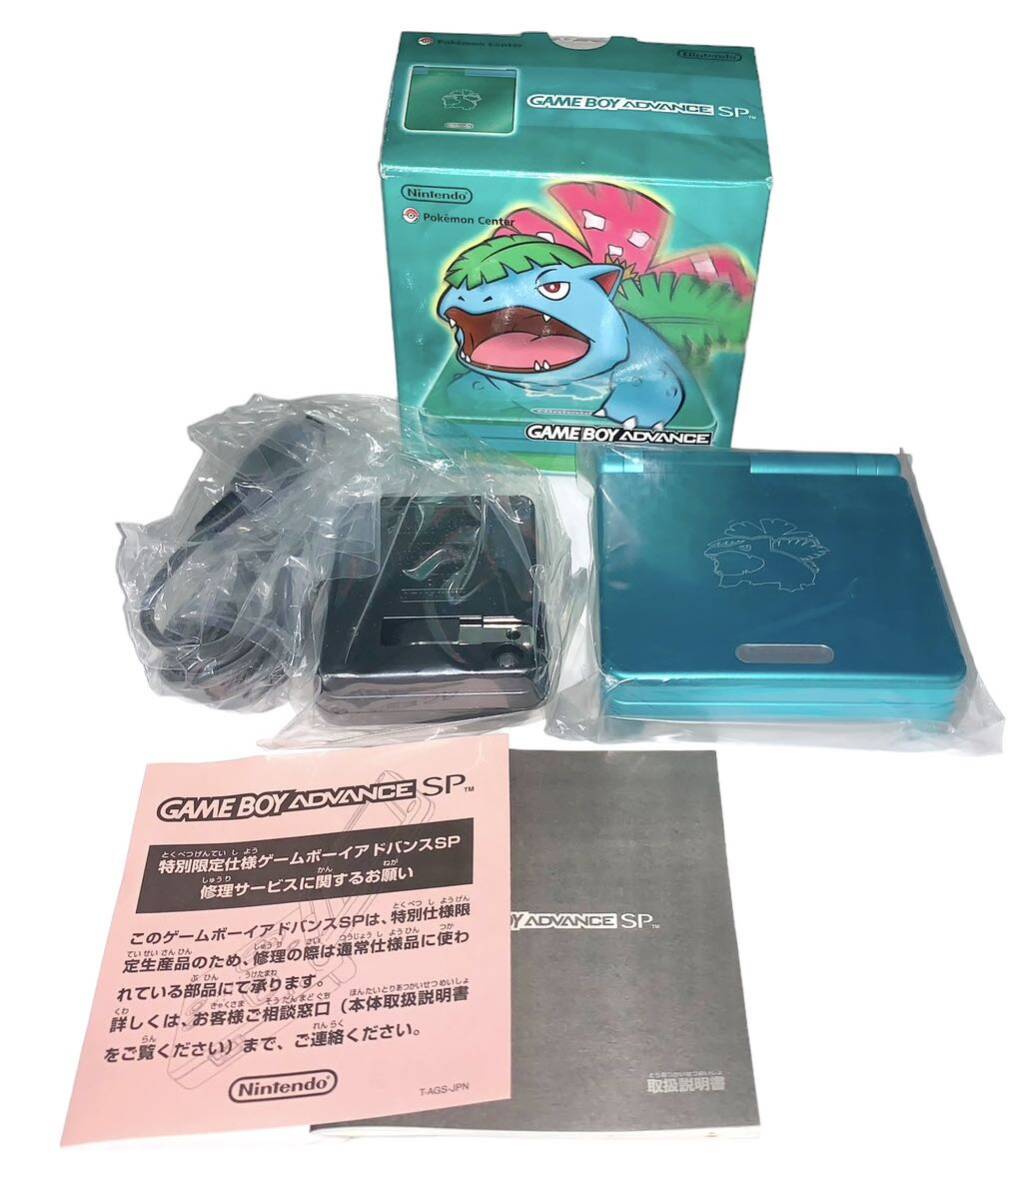  dead stock unused goods fsigibana edition Game Boy Advance SP body 